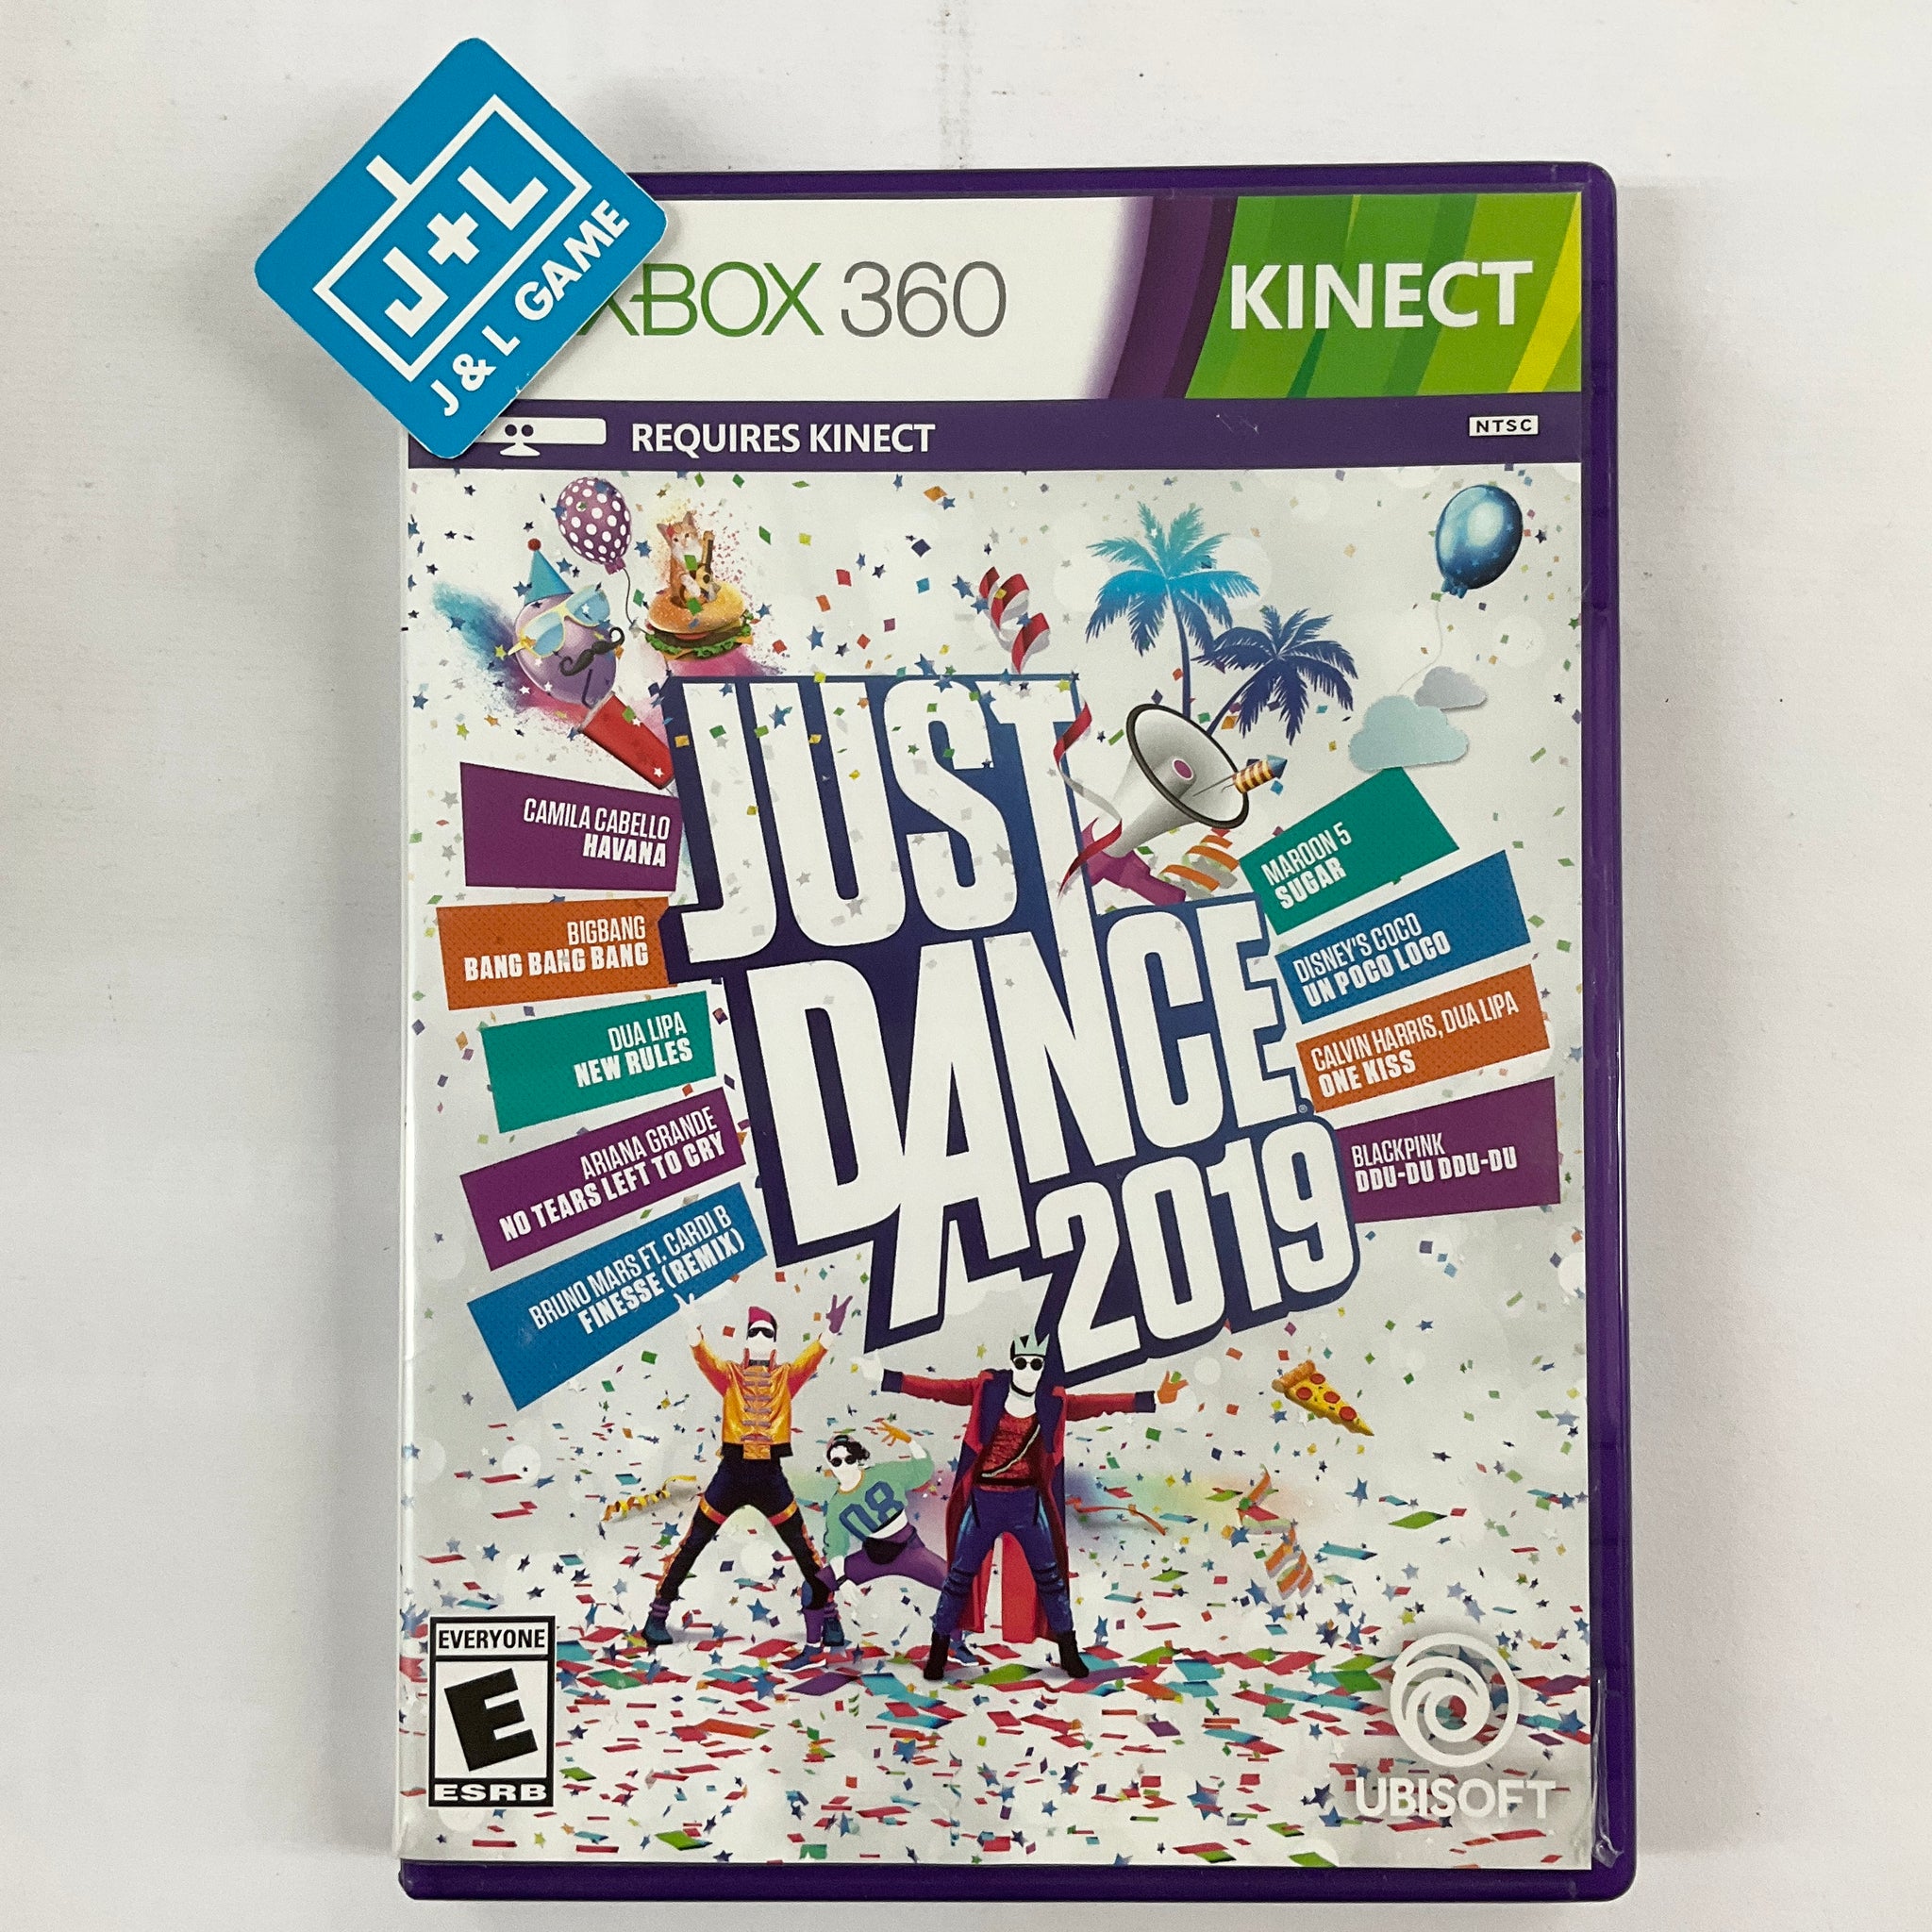 Microsoft Just Dance 2019 Video Games